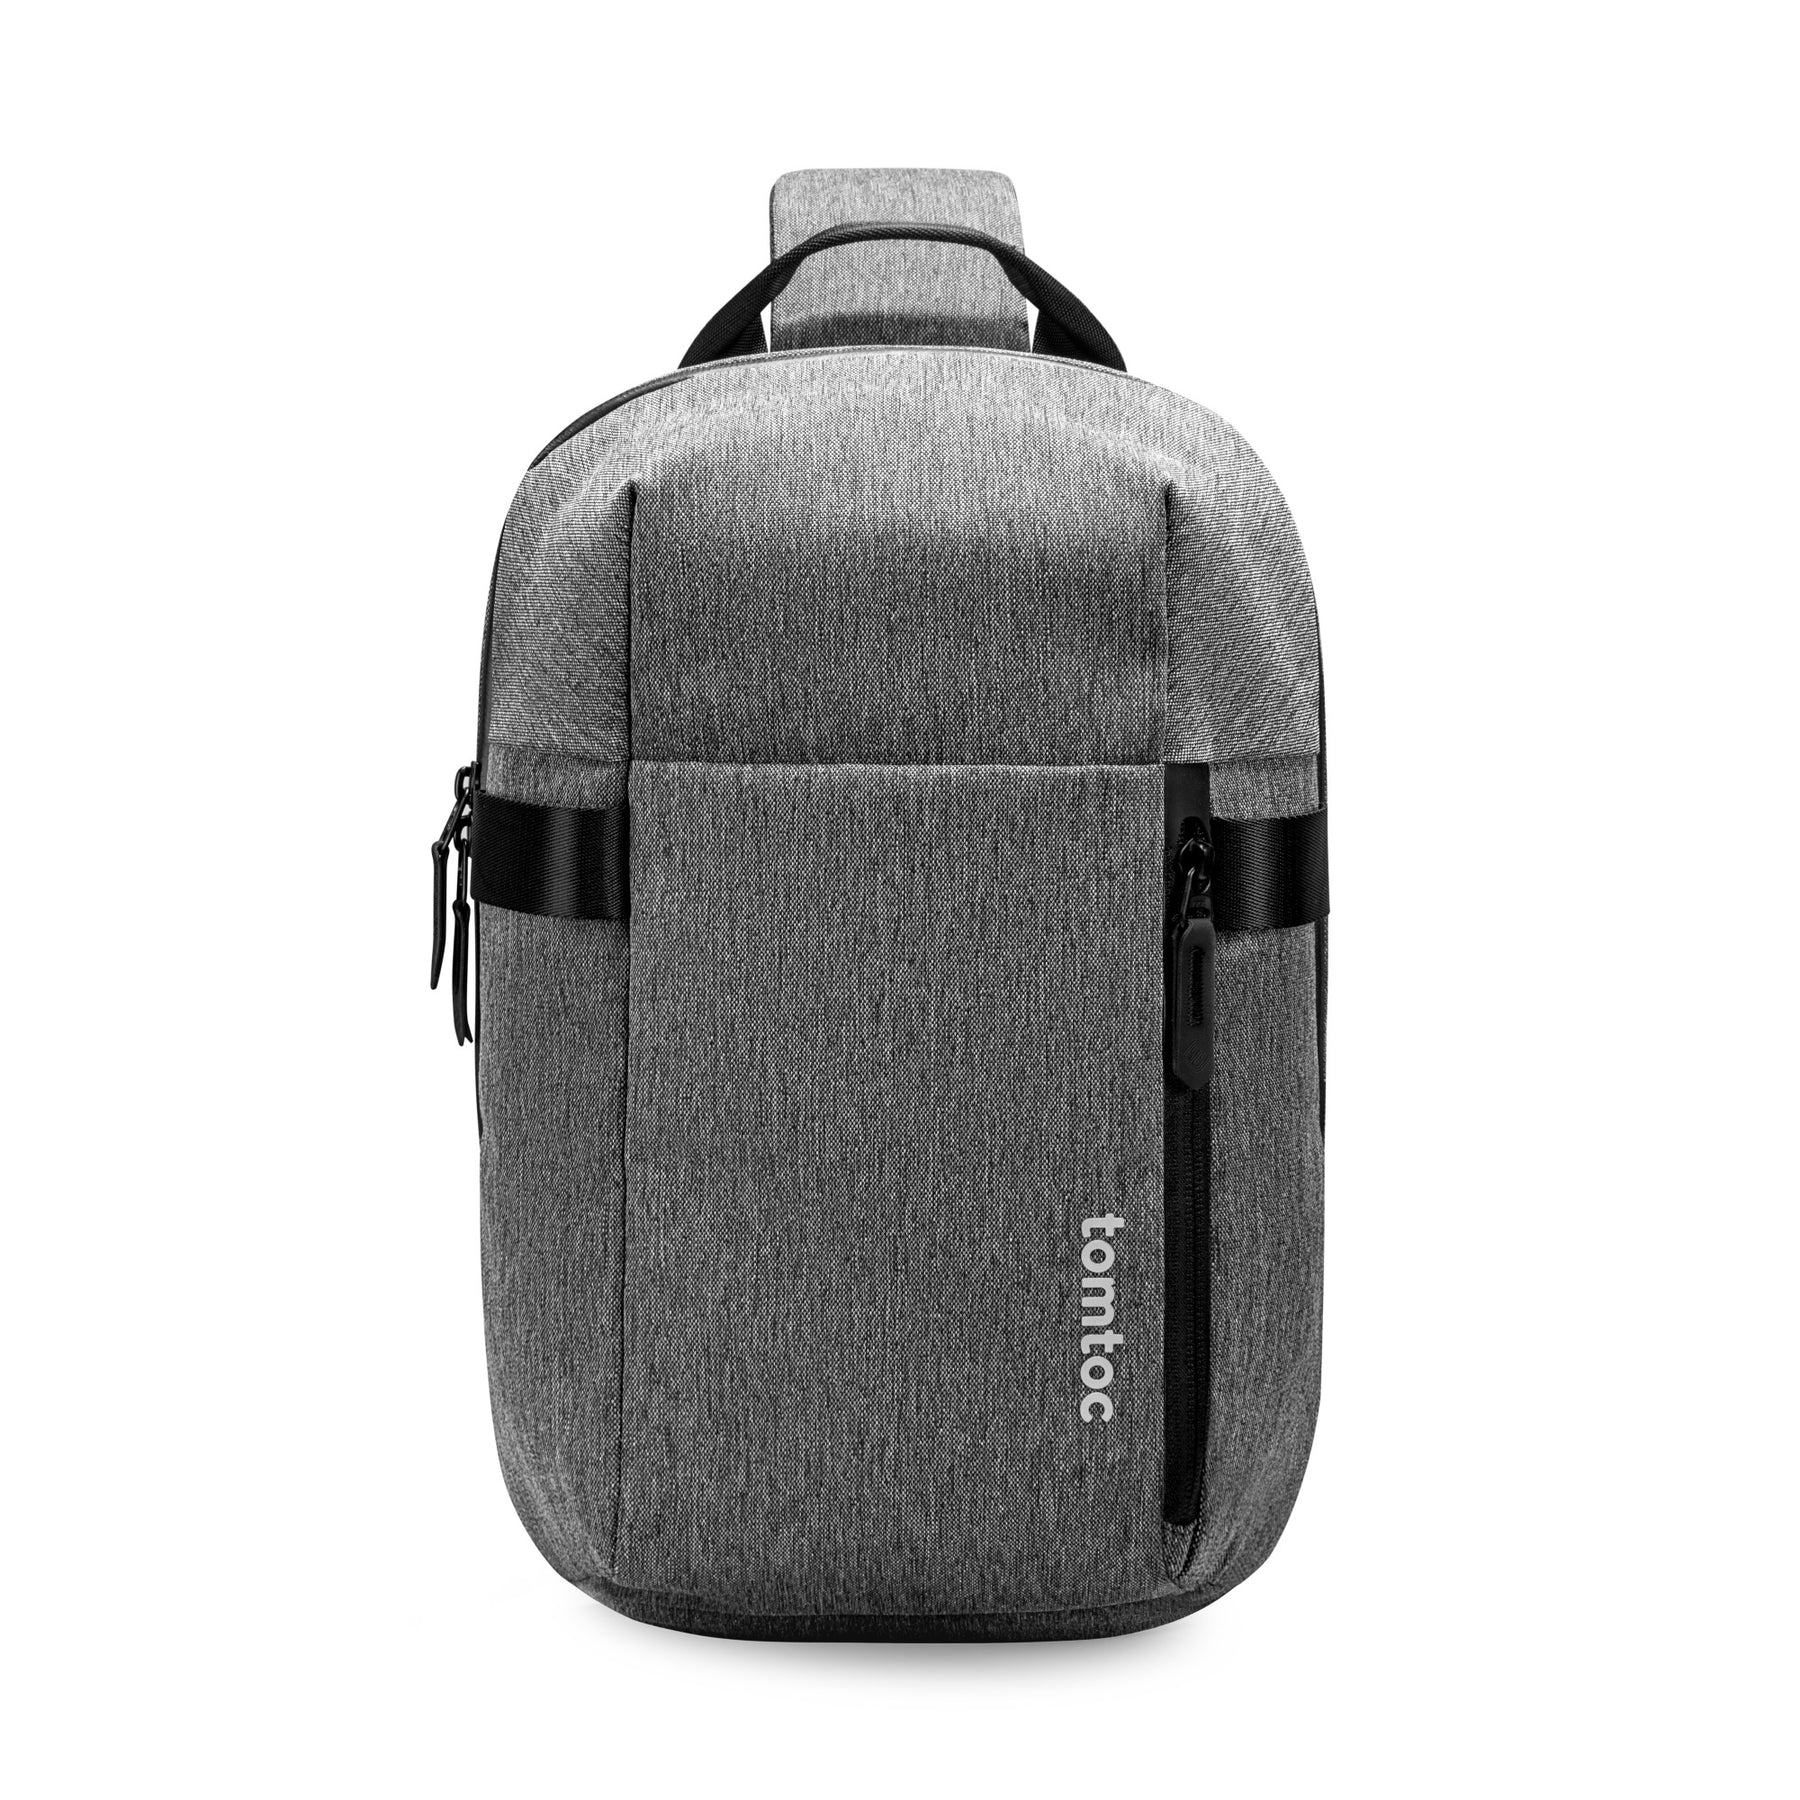 Navigator-T24 Sling Bag 7L for 13-inch MacBook Air/Pro